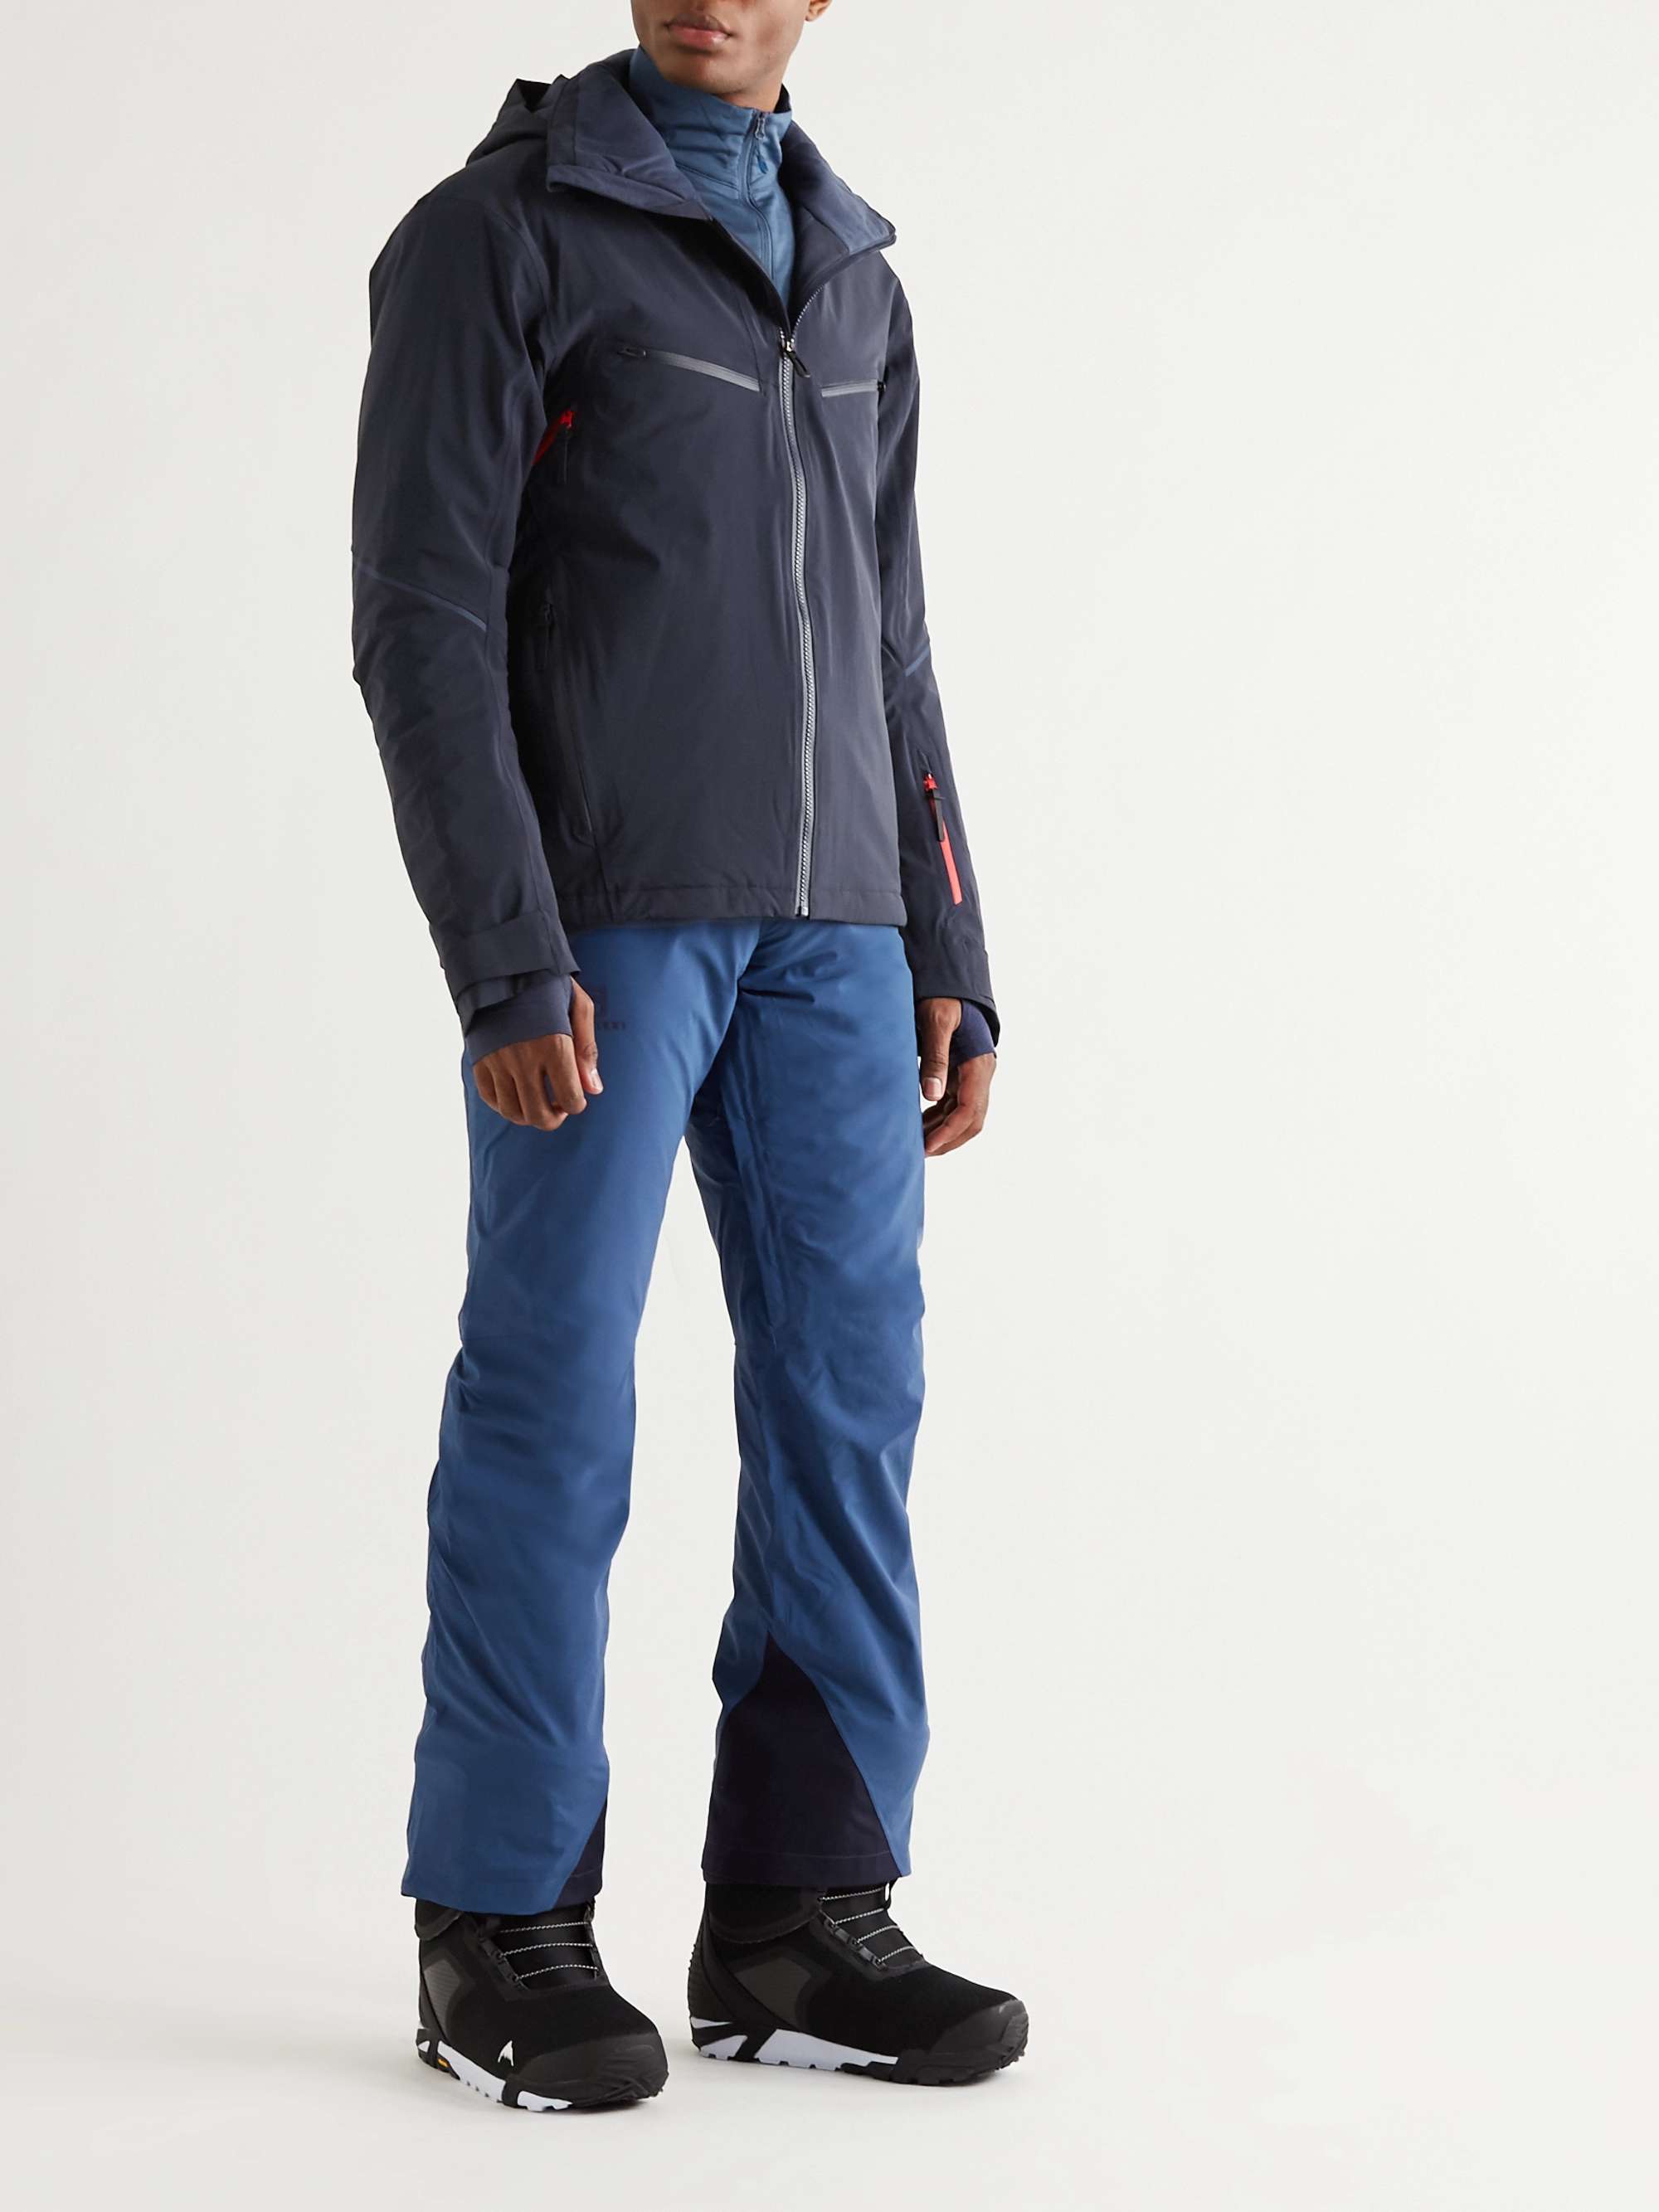 SALOMON Brilliant Hooded Ski Jacket | MR PORTER